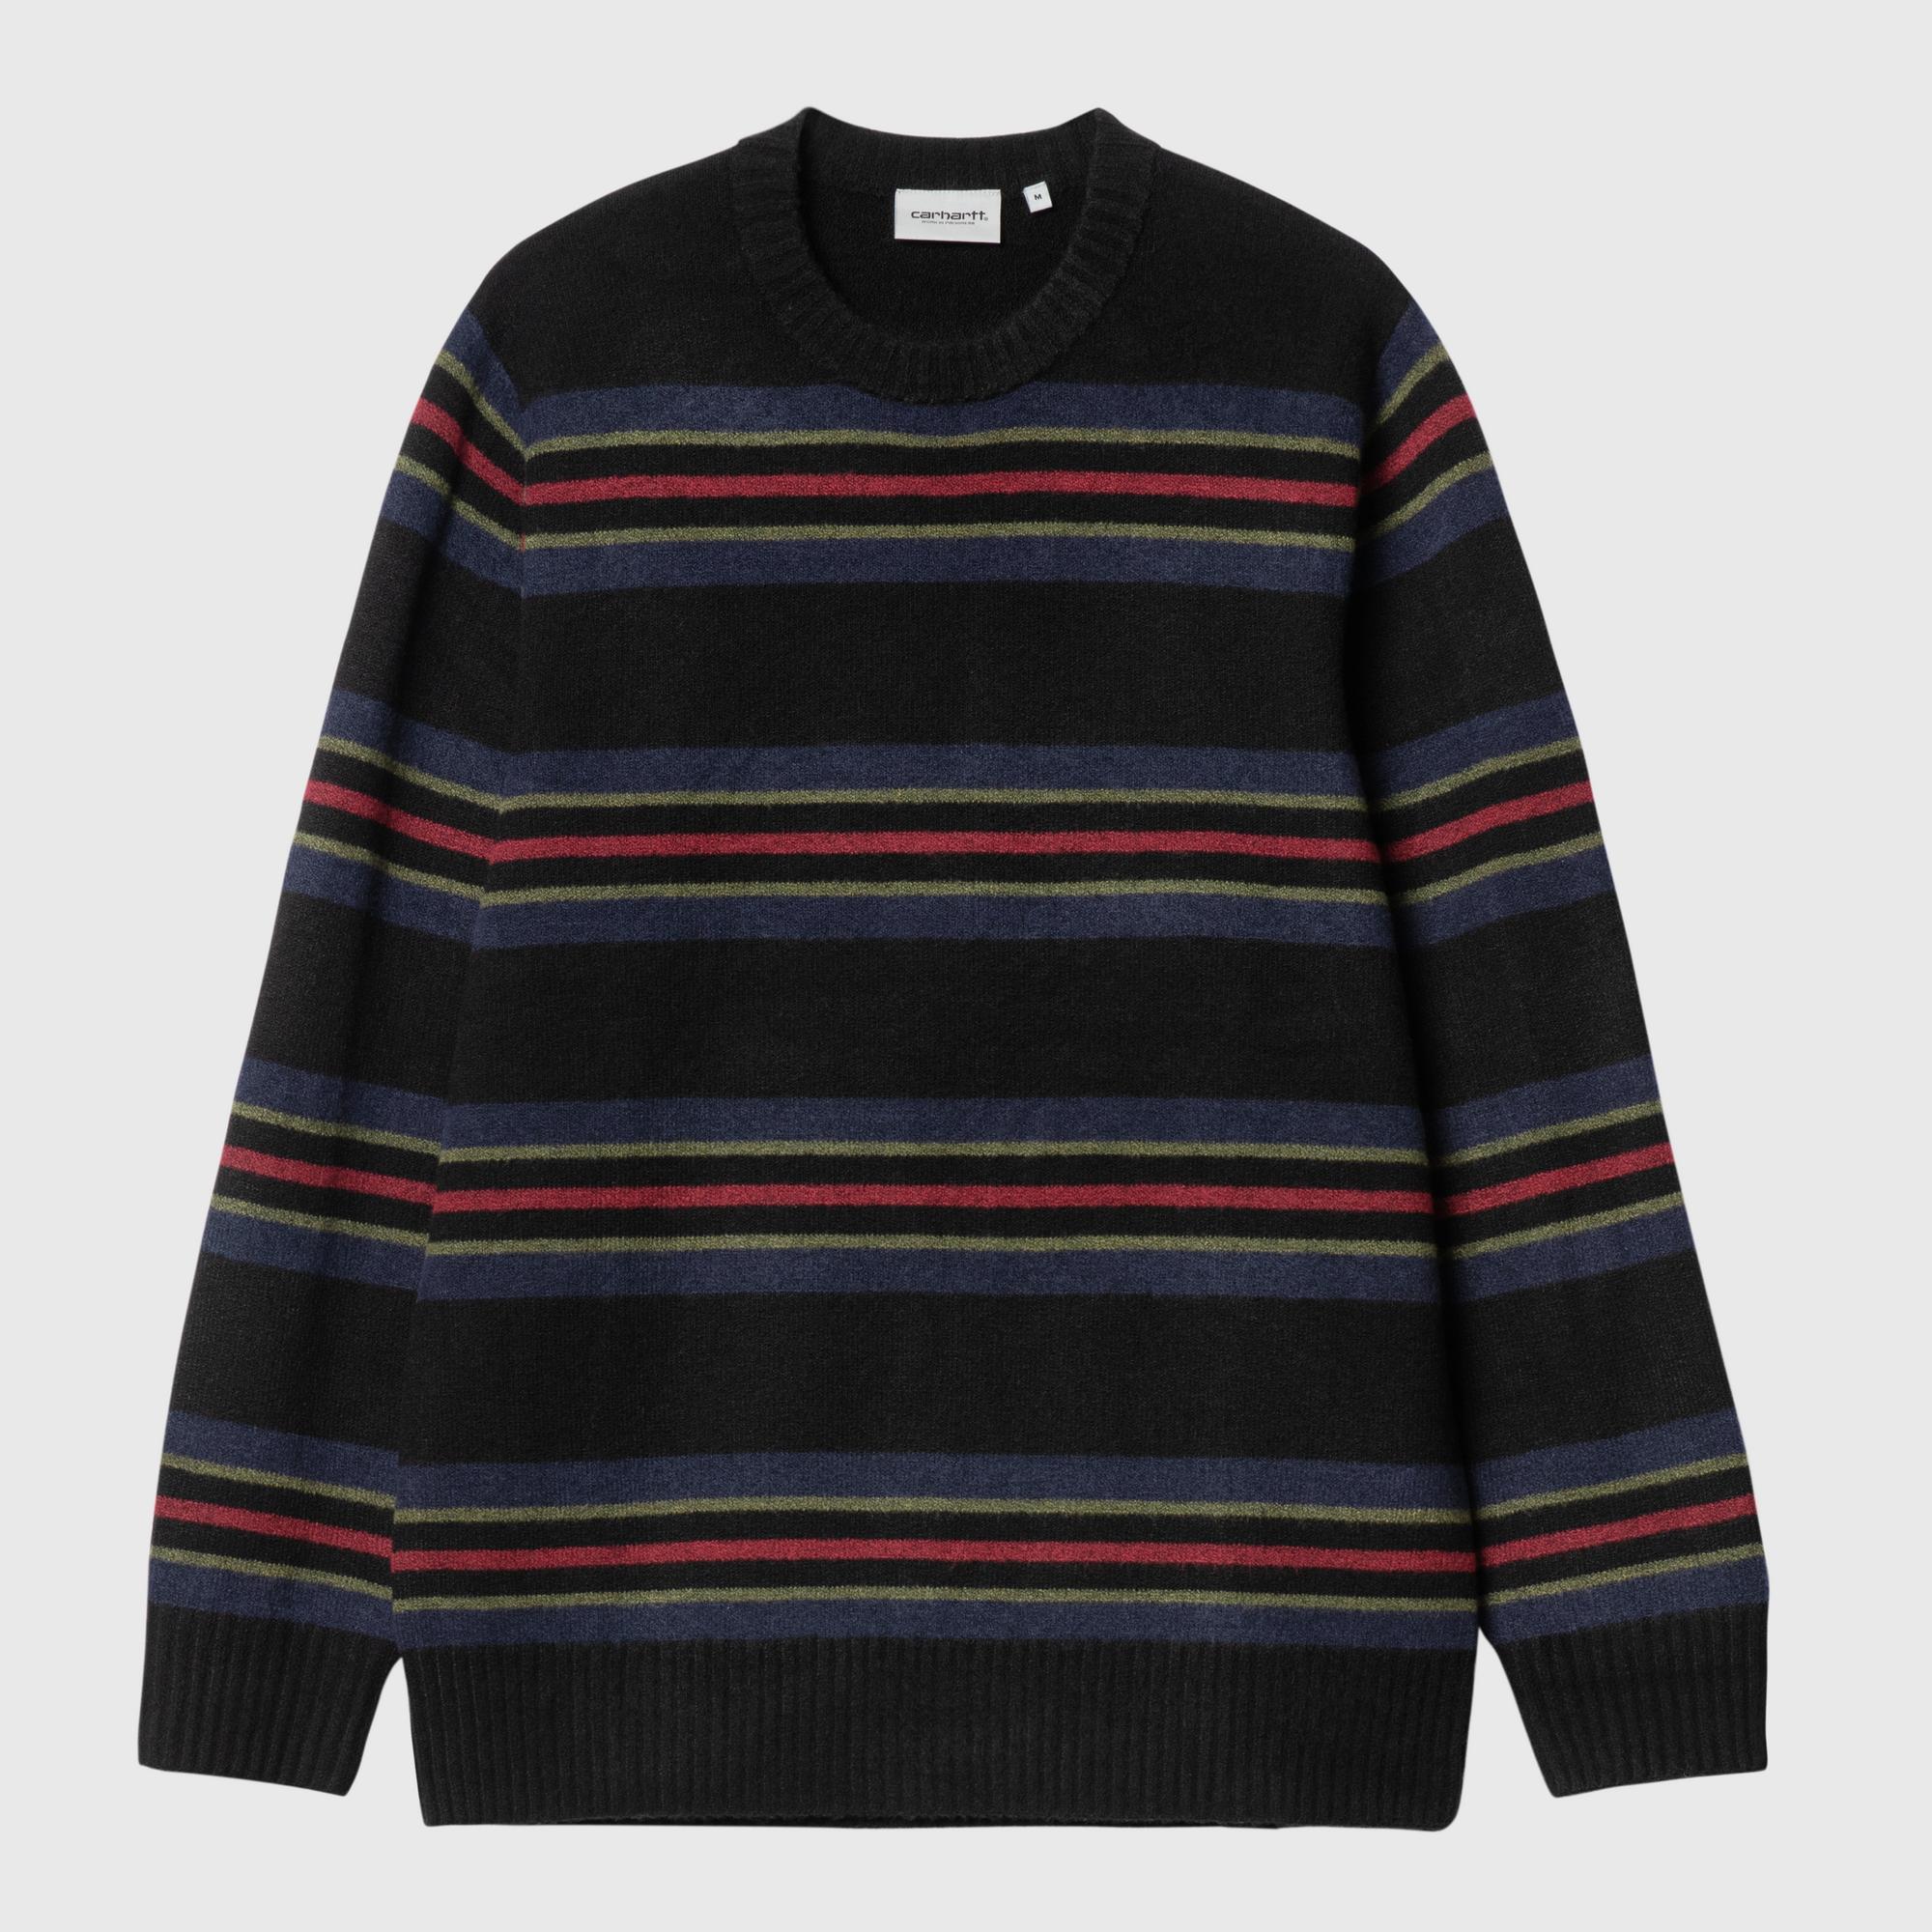 Oregon Sweater in Black Starco Stripe